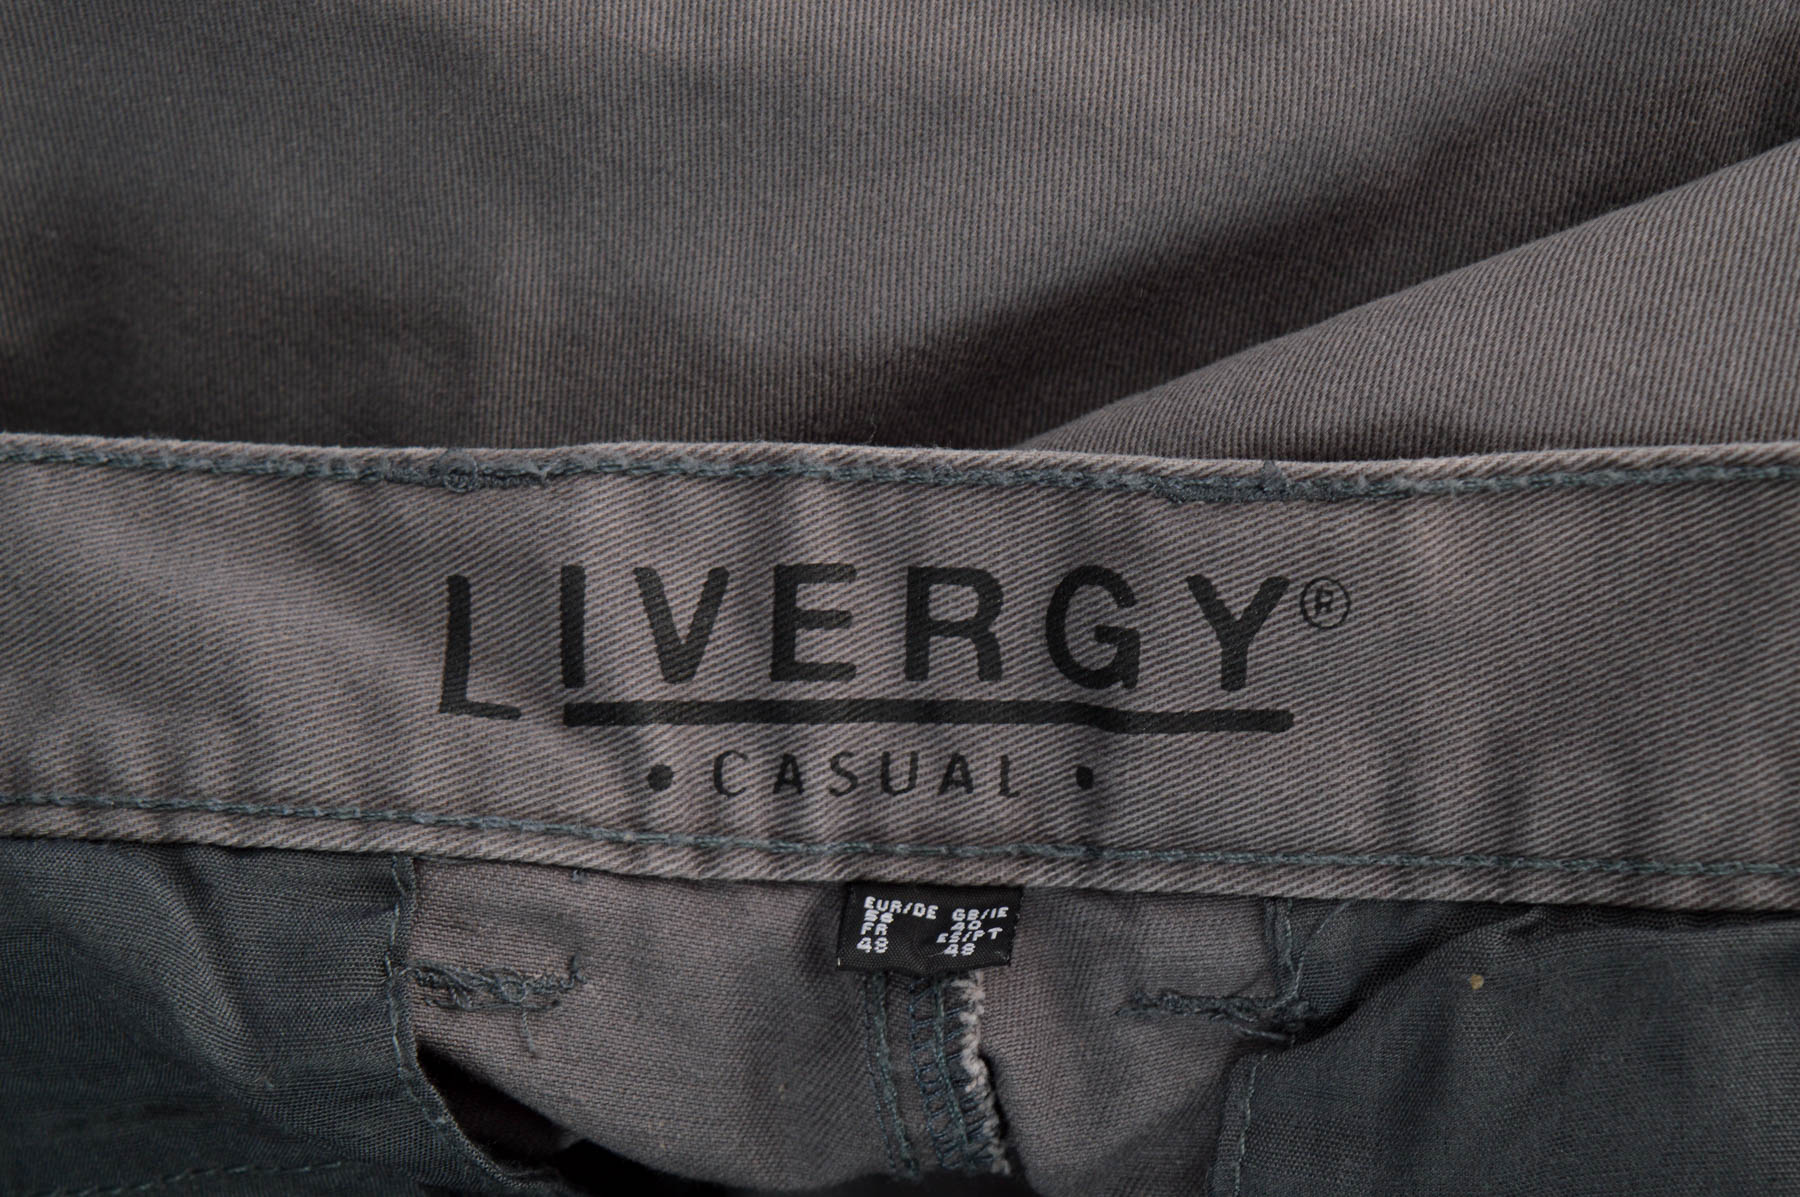 Men's trousers - LIVERGY - 2